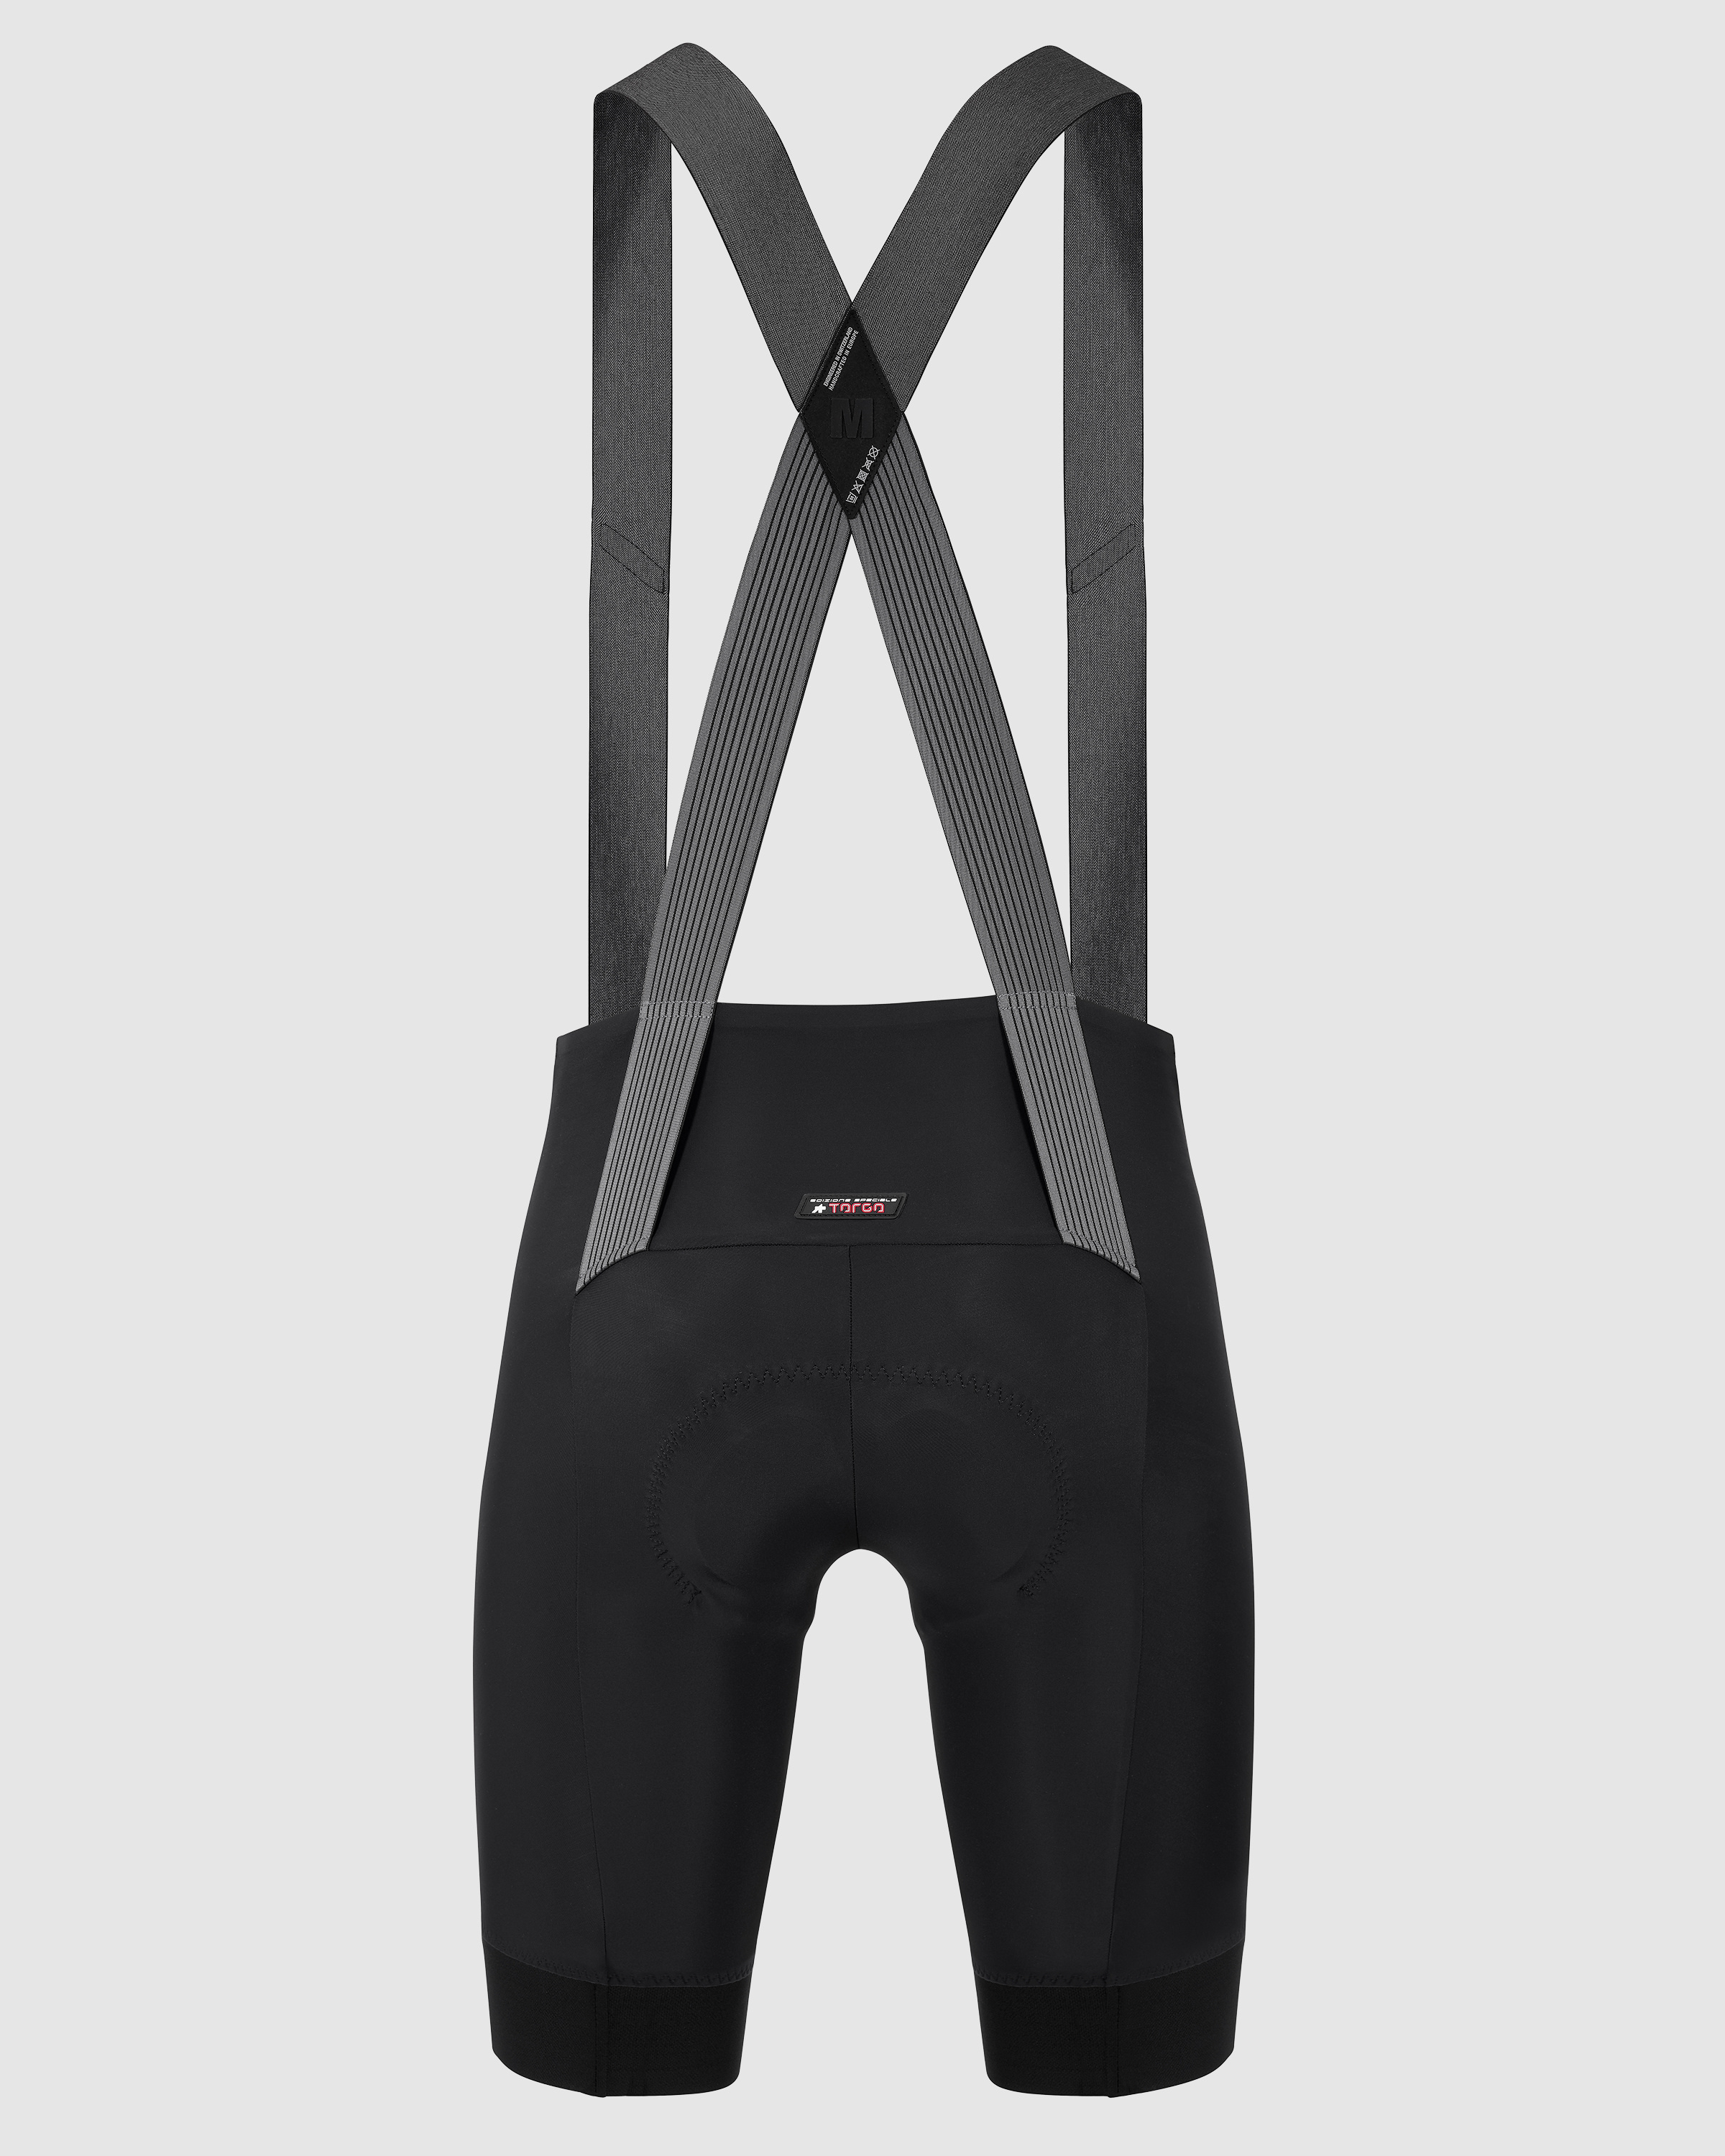 EQUIPE RS Bib Shorts S9 TARGA - ASSOS Of Switzerland - Official Outlet